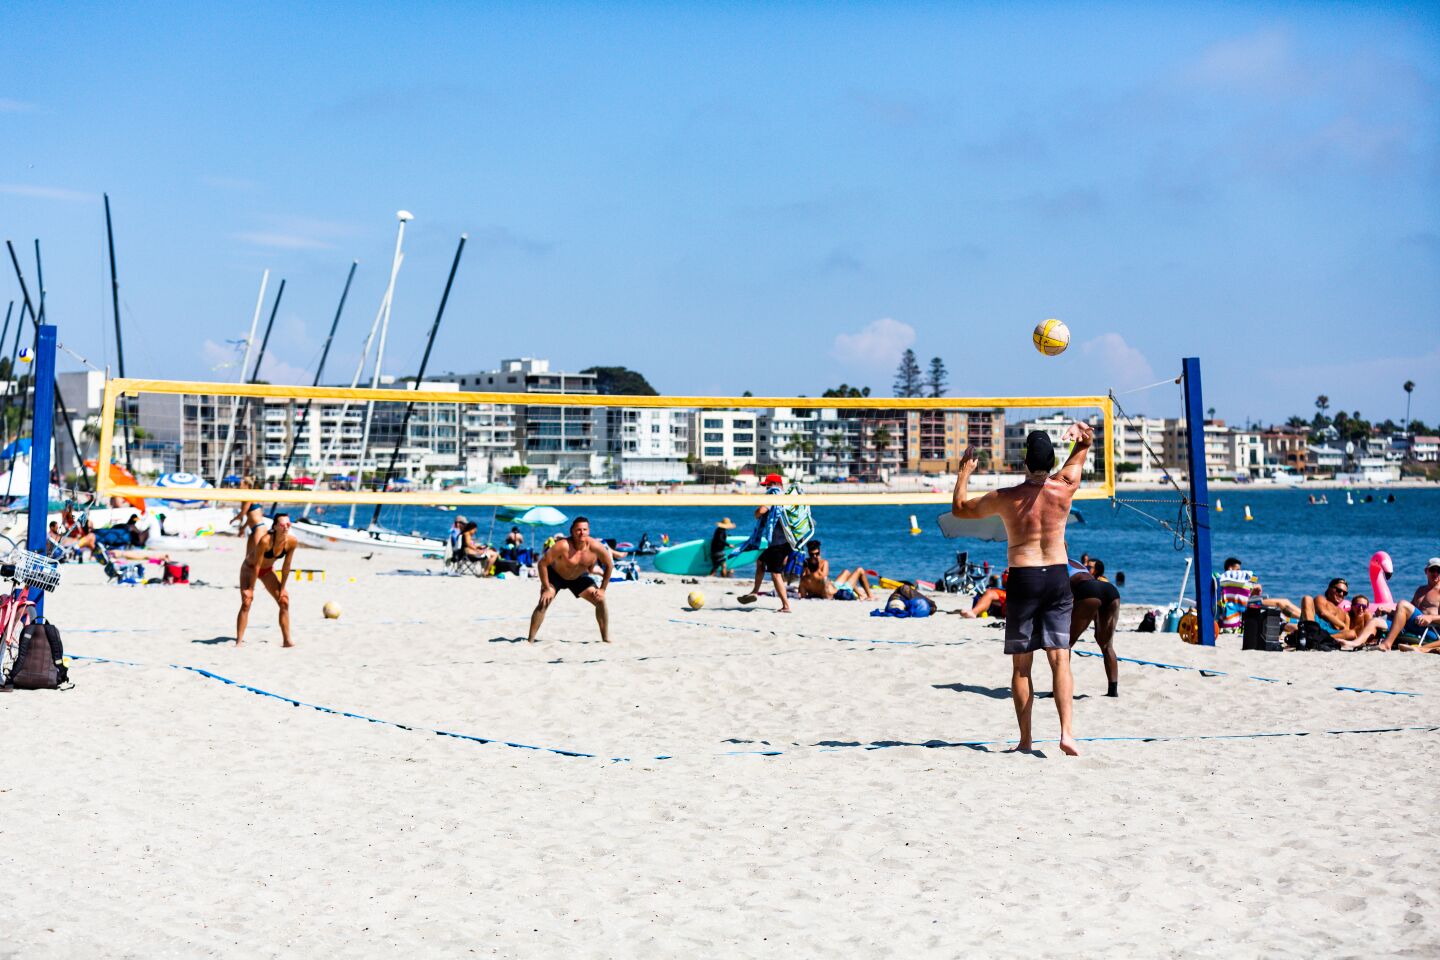 Beach volleyball players enjoy the sunshine at Sail Bay.